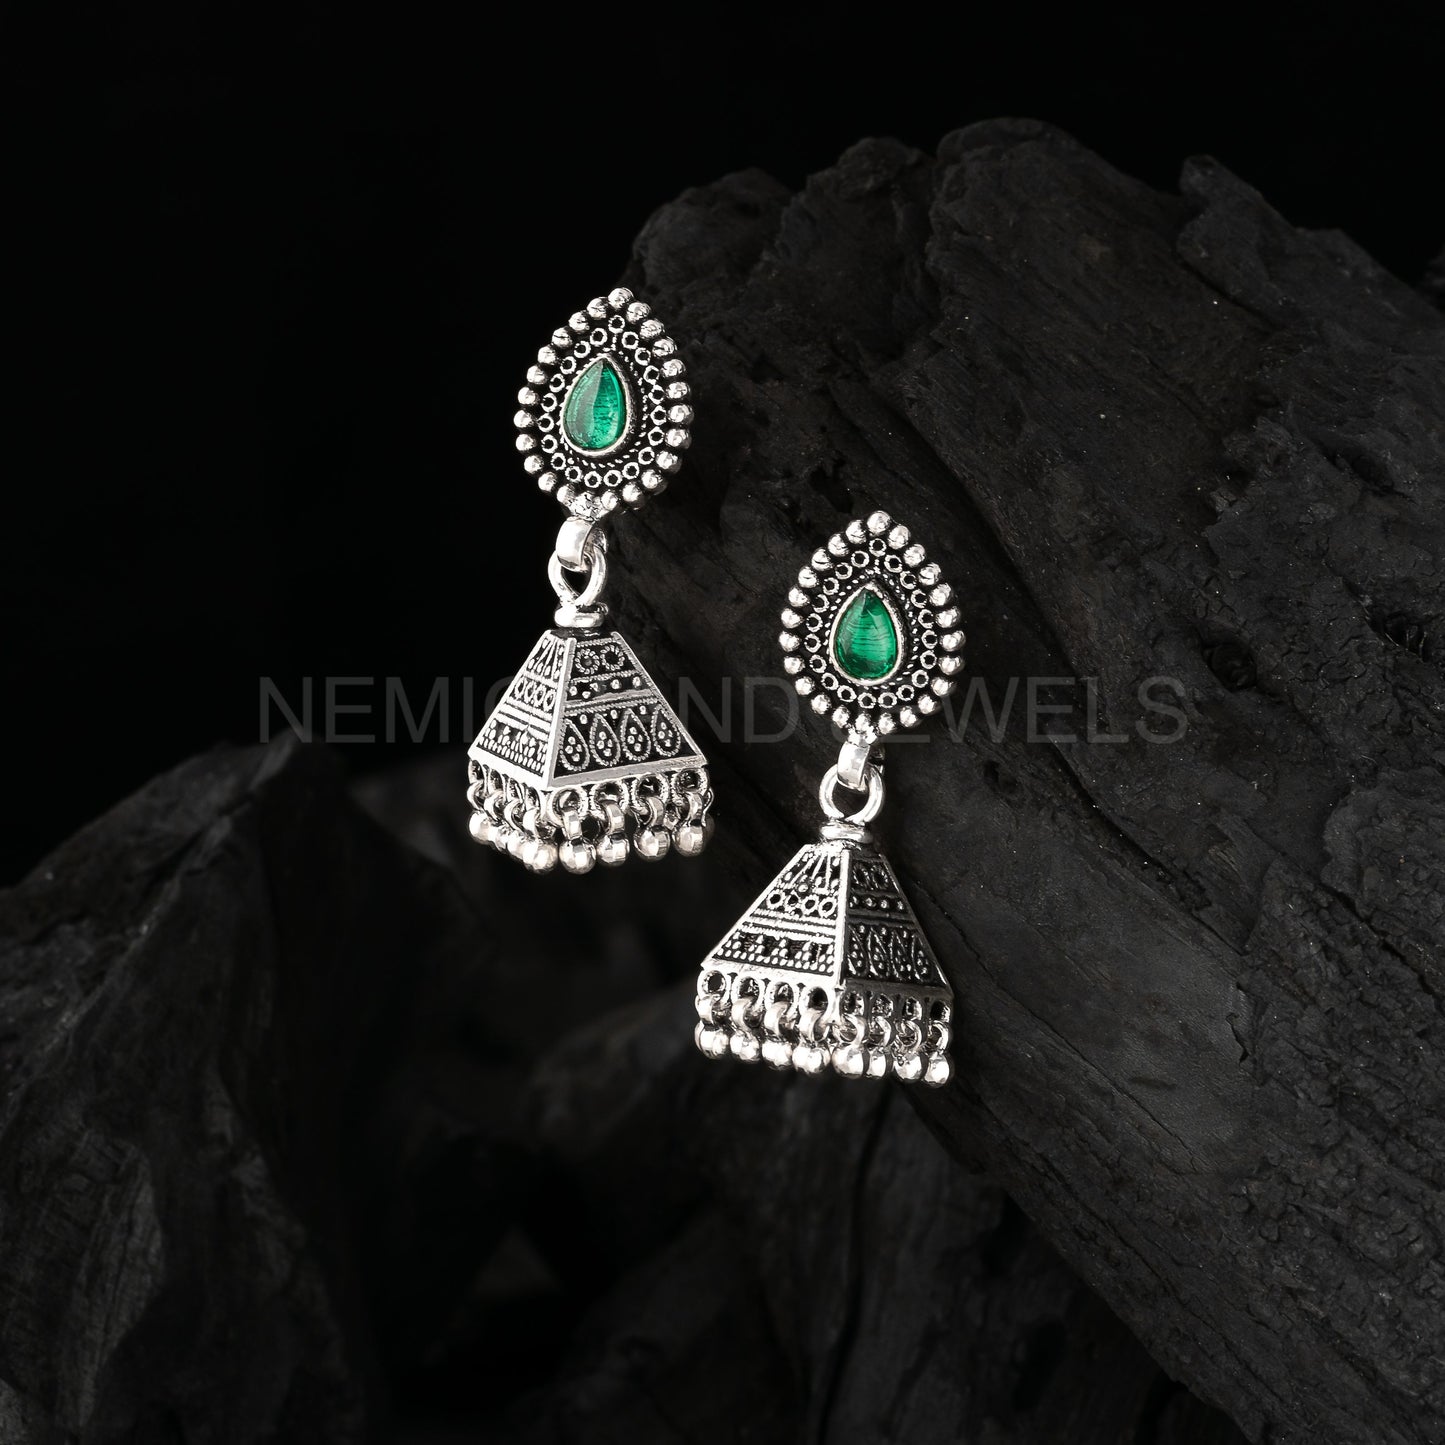 925 Solid Sterling Silver Indian Traditional Jhumka Earrings - Dangle Drop Earrings